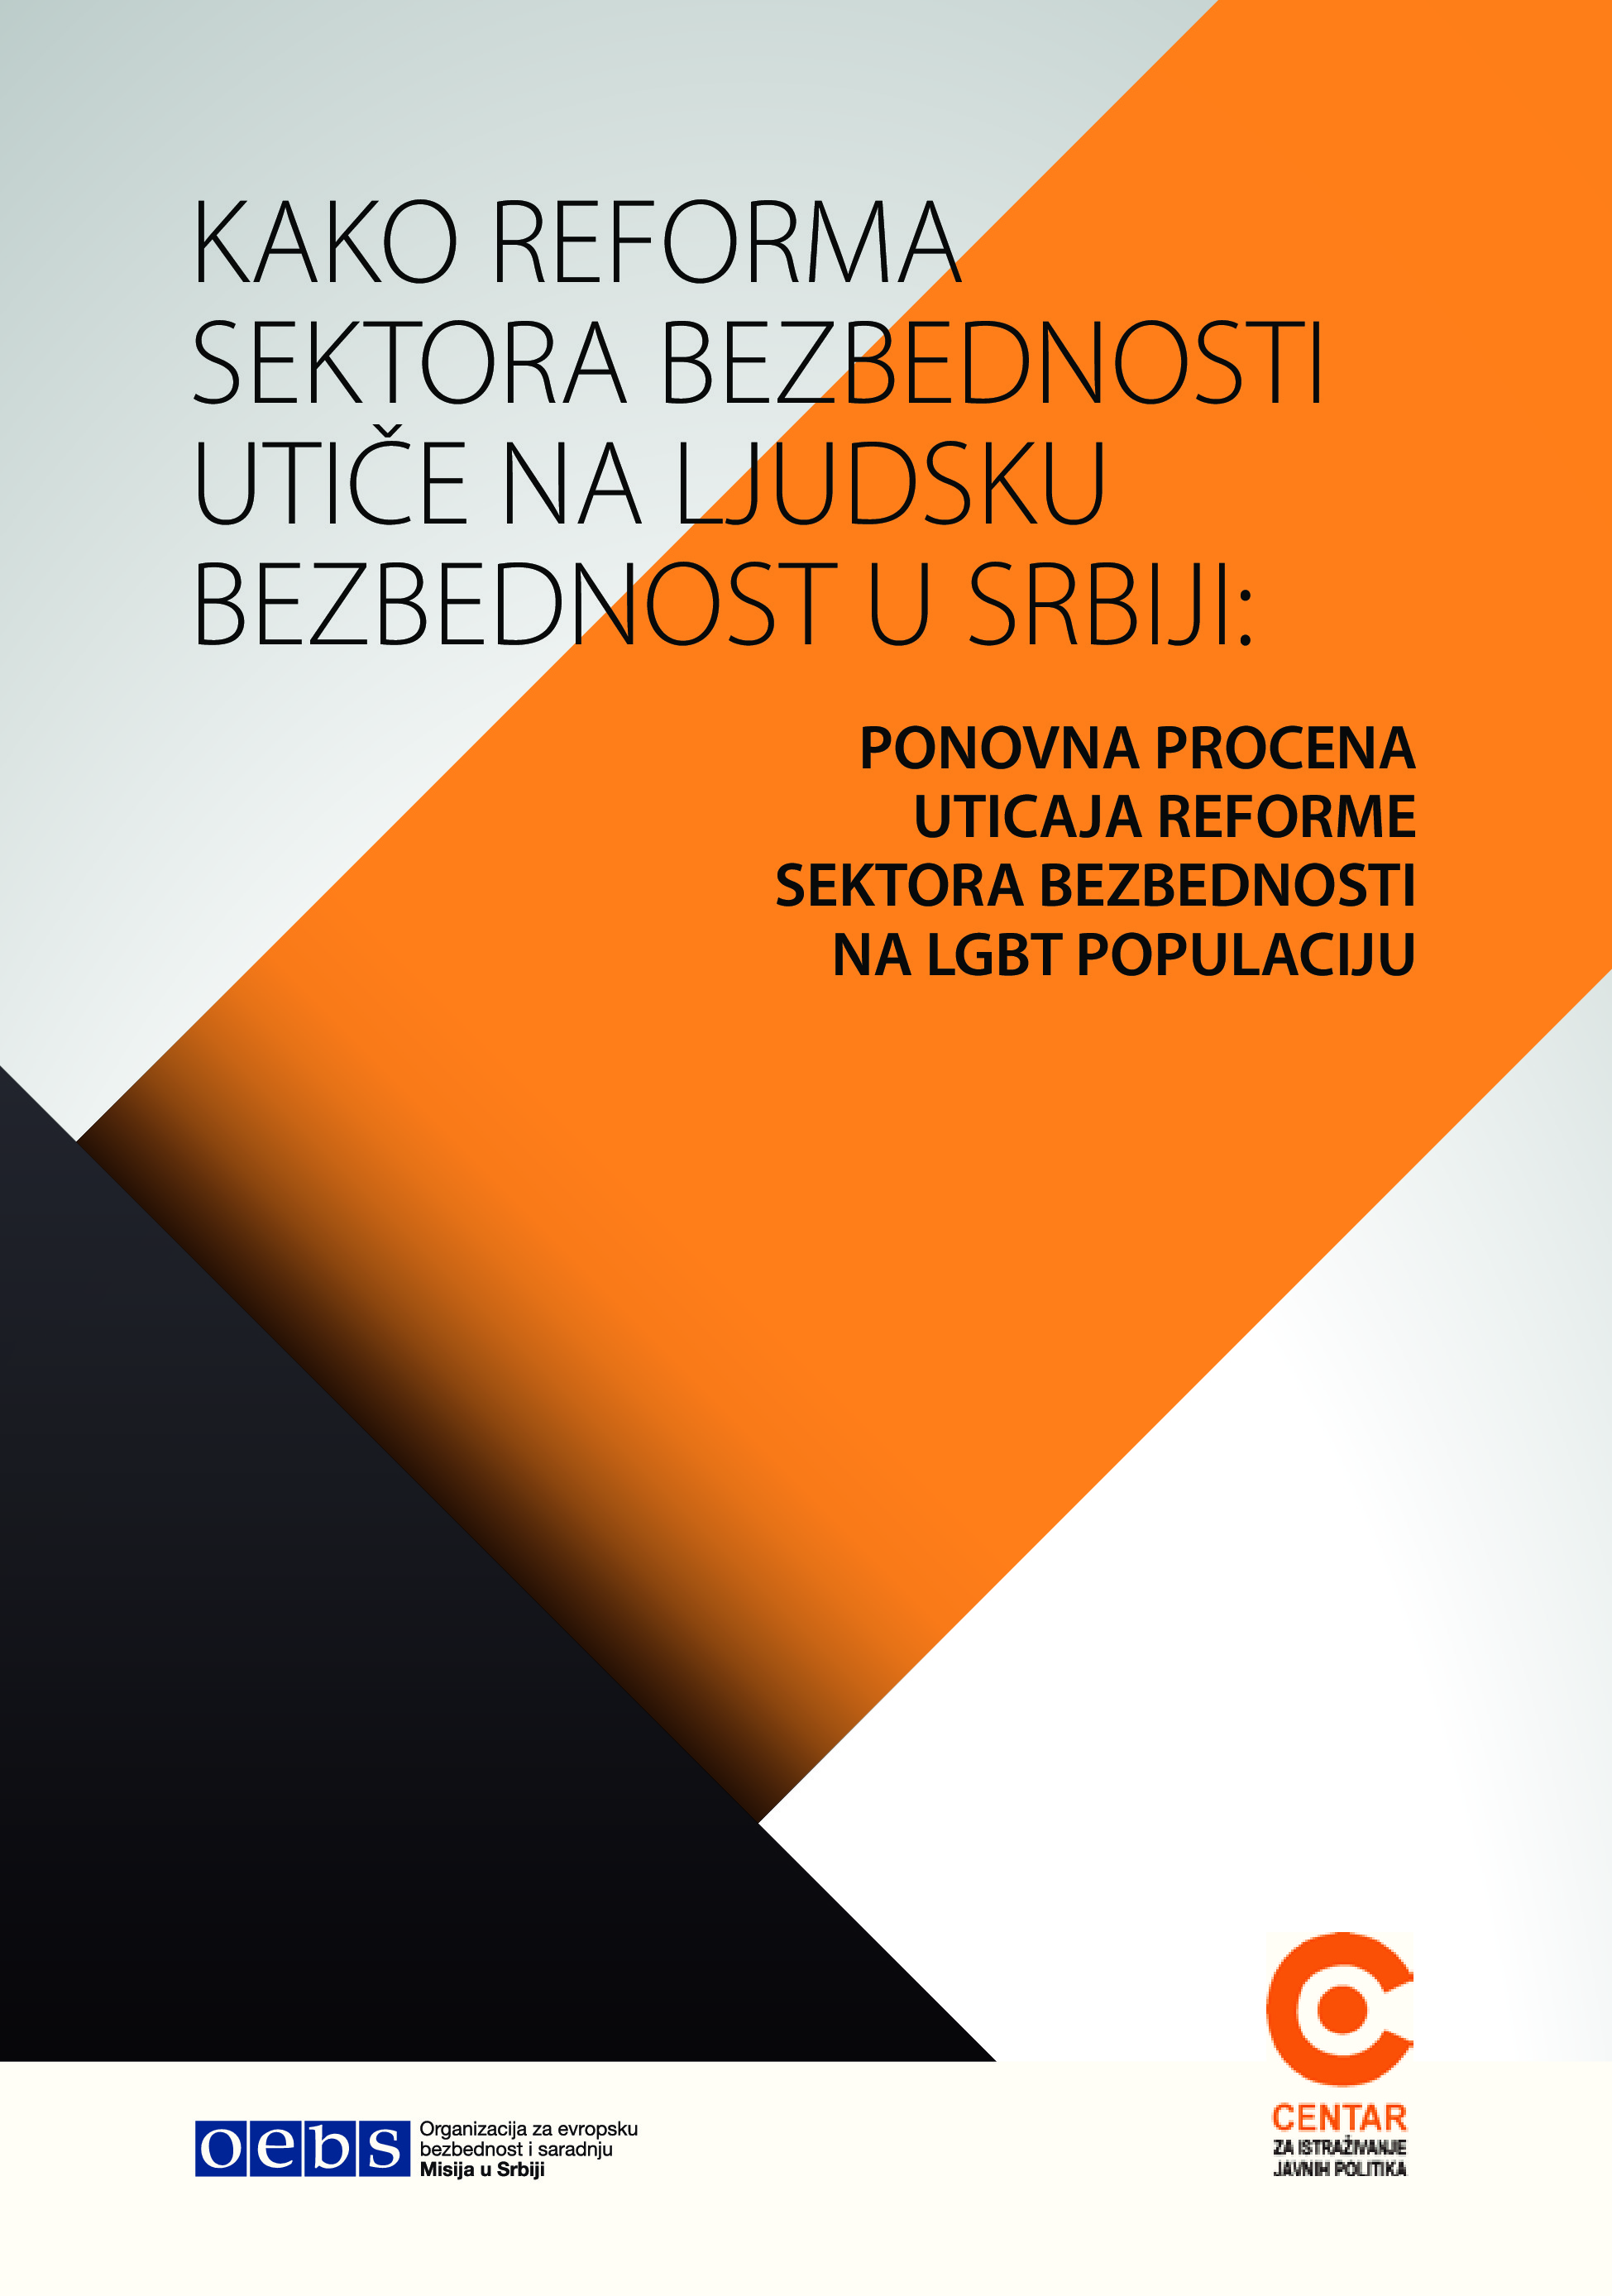 Kako reforma sektora bezbednosti utiče na ljudsku bezbednost u Srbiji? Ponovna procena uticaja reforme sektora bezbednosti na LGBT populaciju